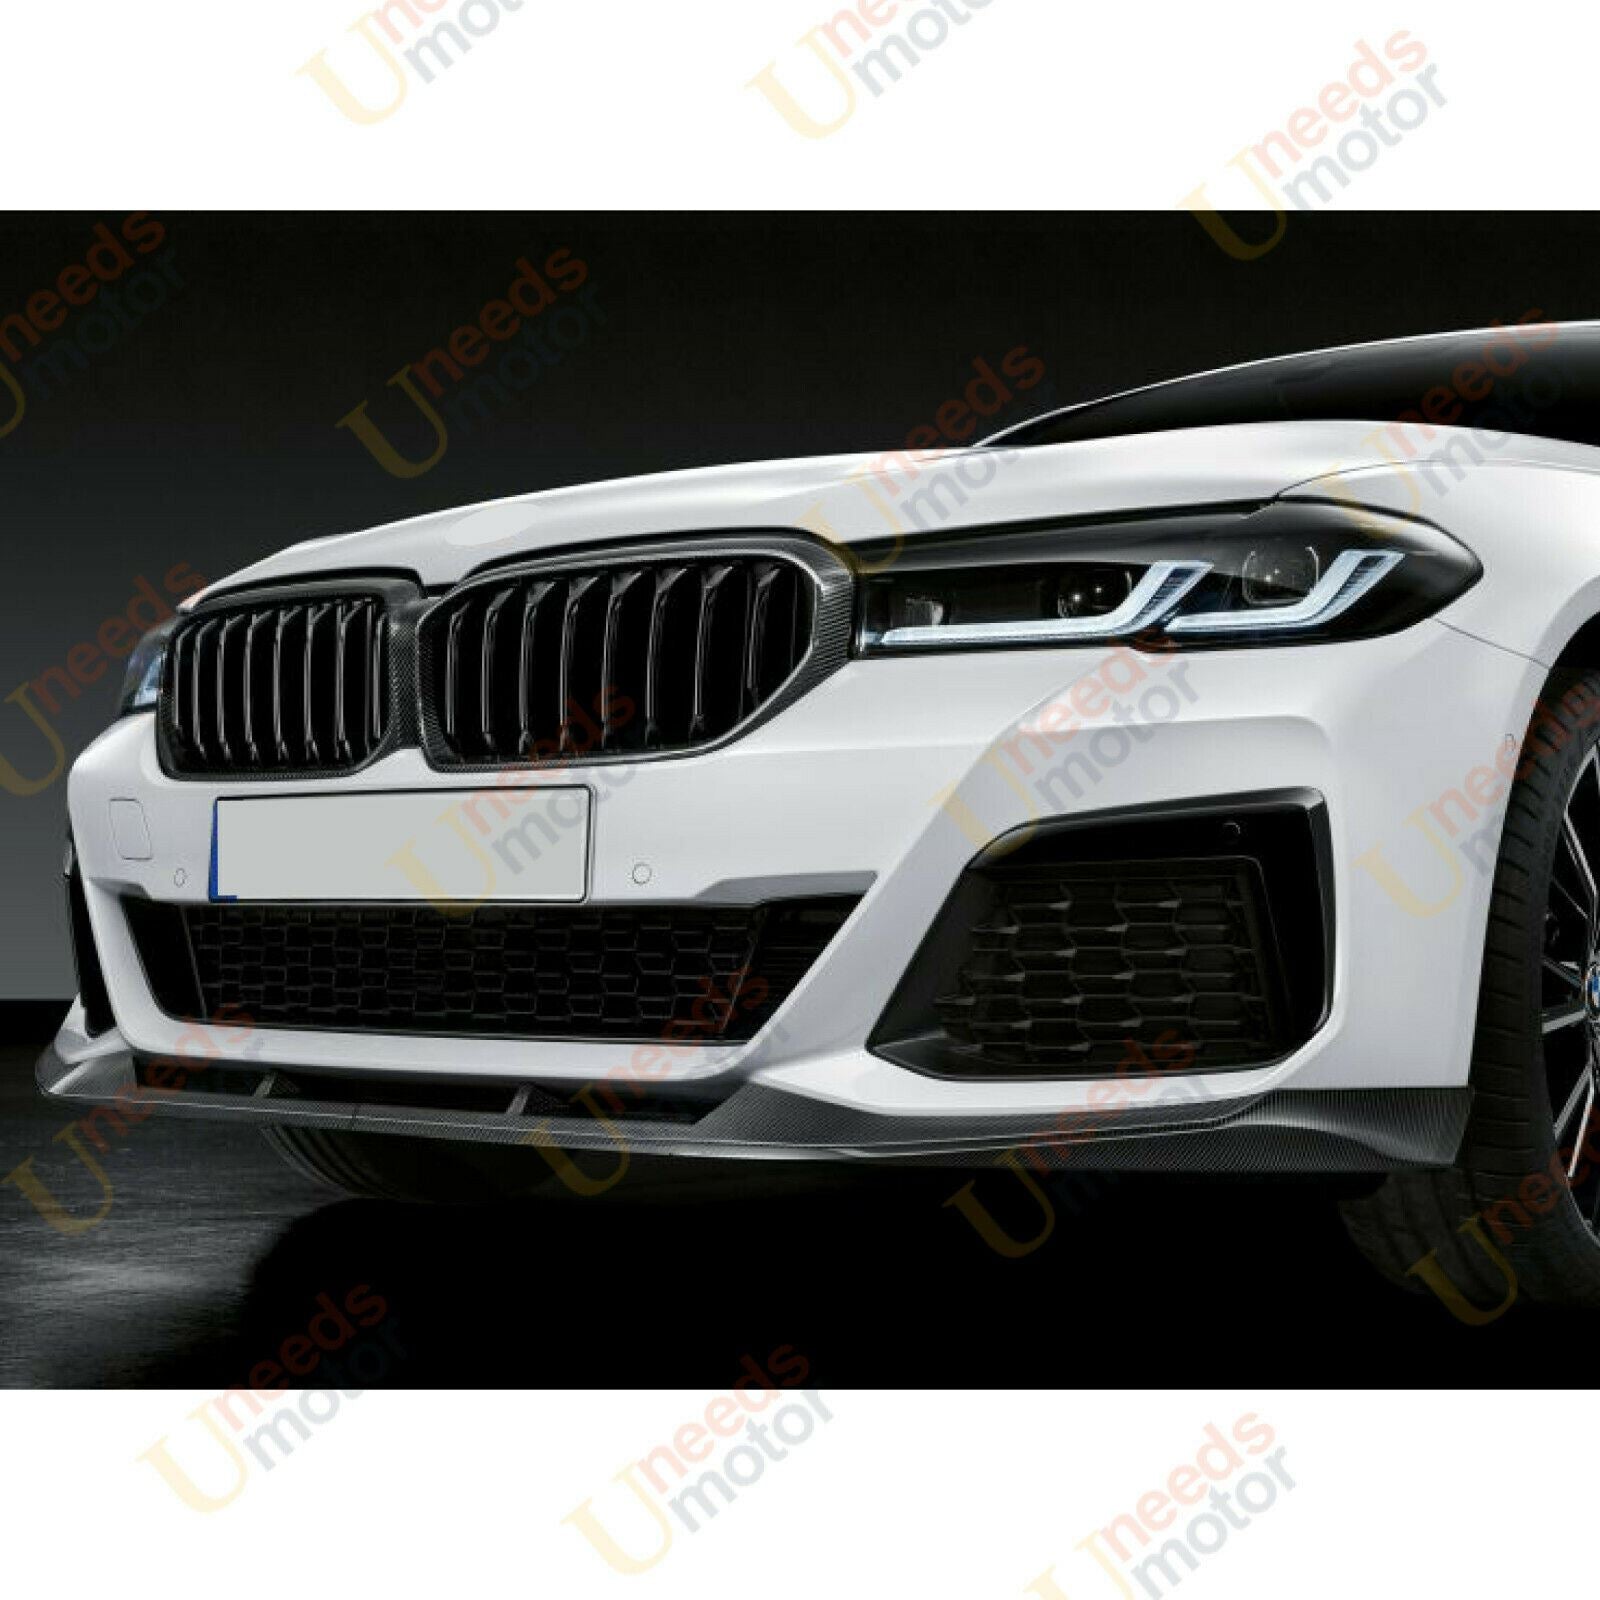 Compatible con BMW G30 530i 540i M550i M Sport 2021-2022, separador de labios de parachoques delantero (negro brillante)